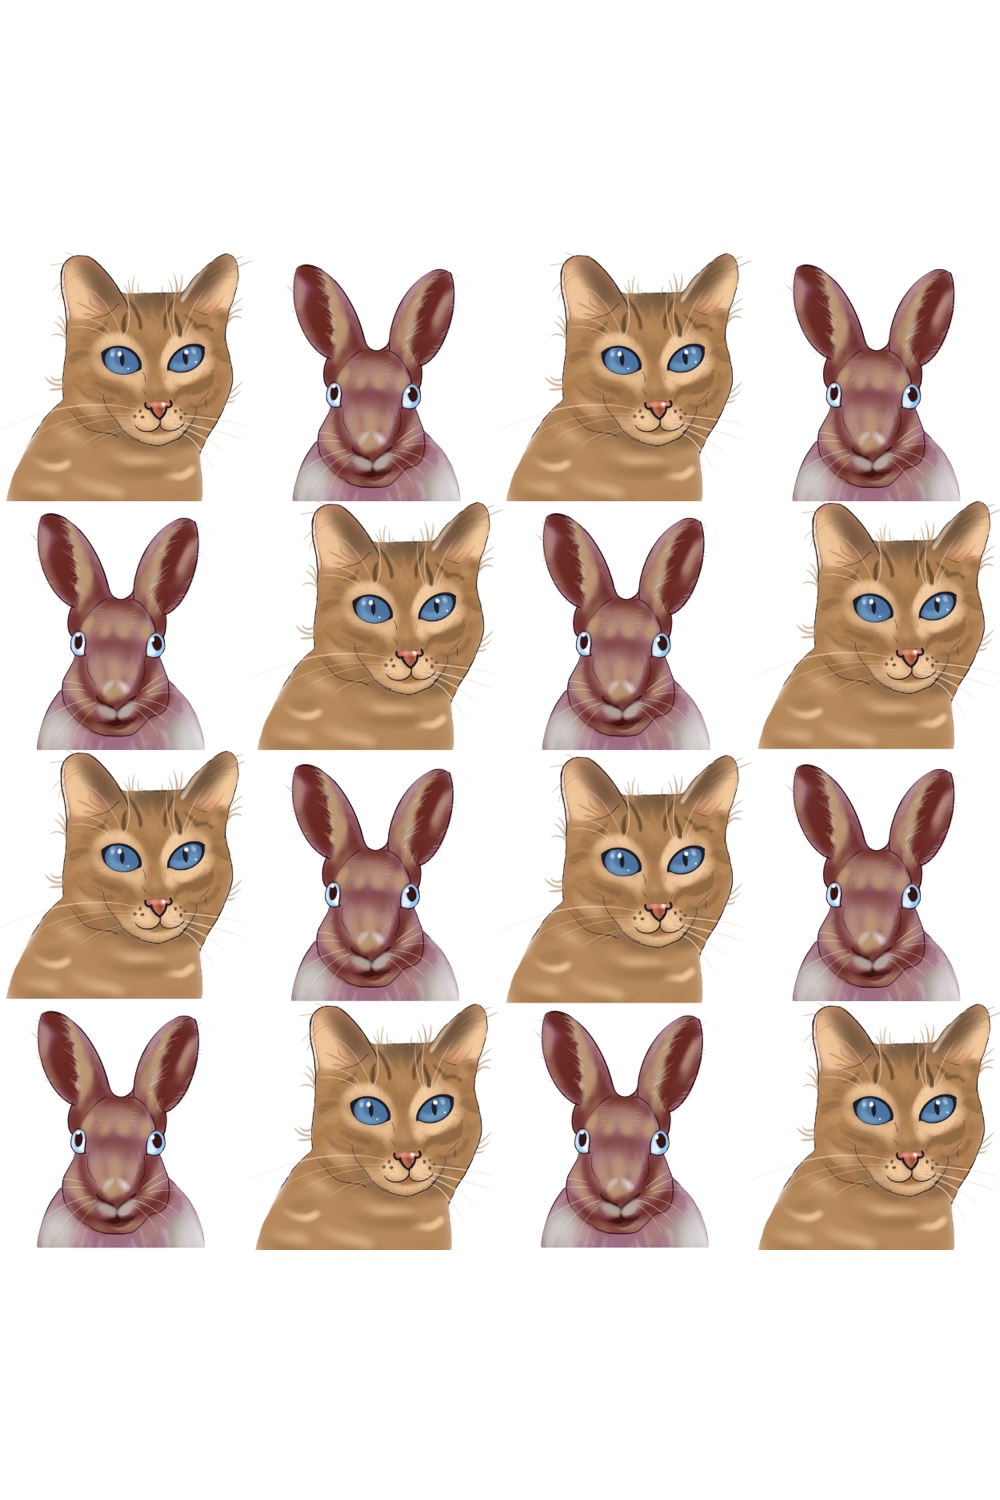 Rabbit and Cat Patterns Design pinterest image.